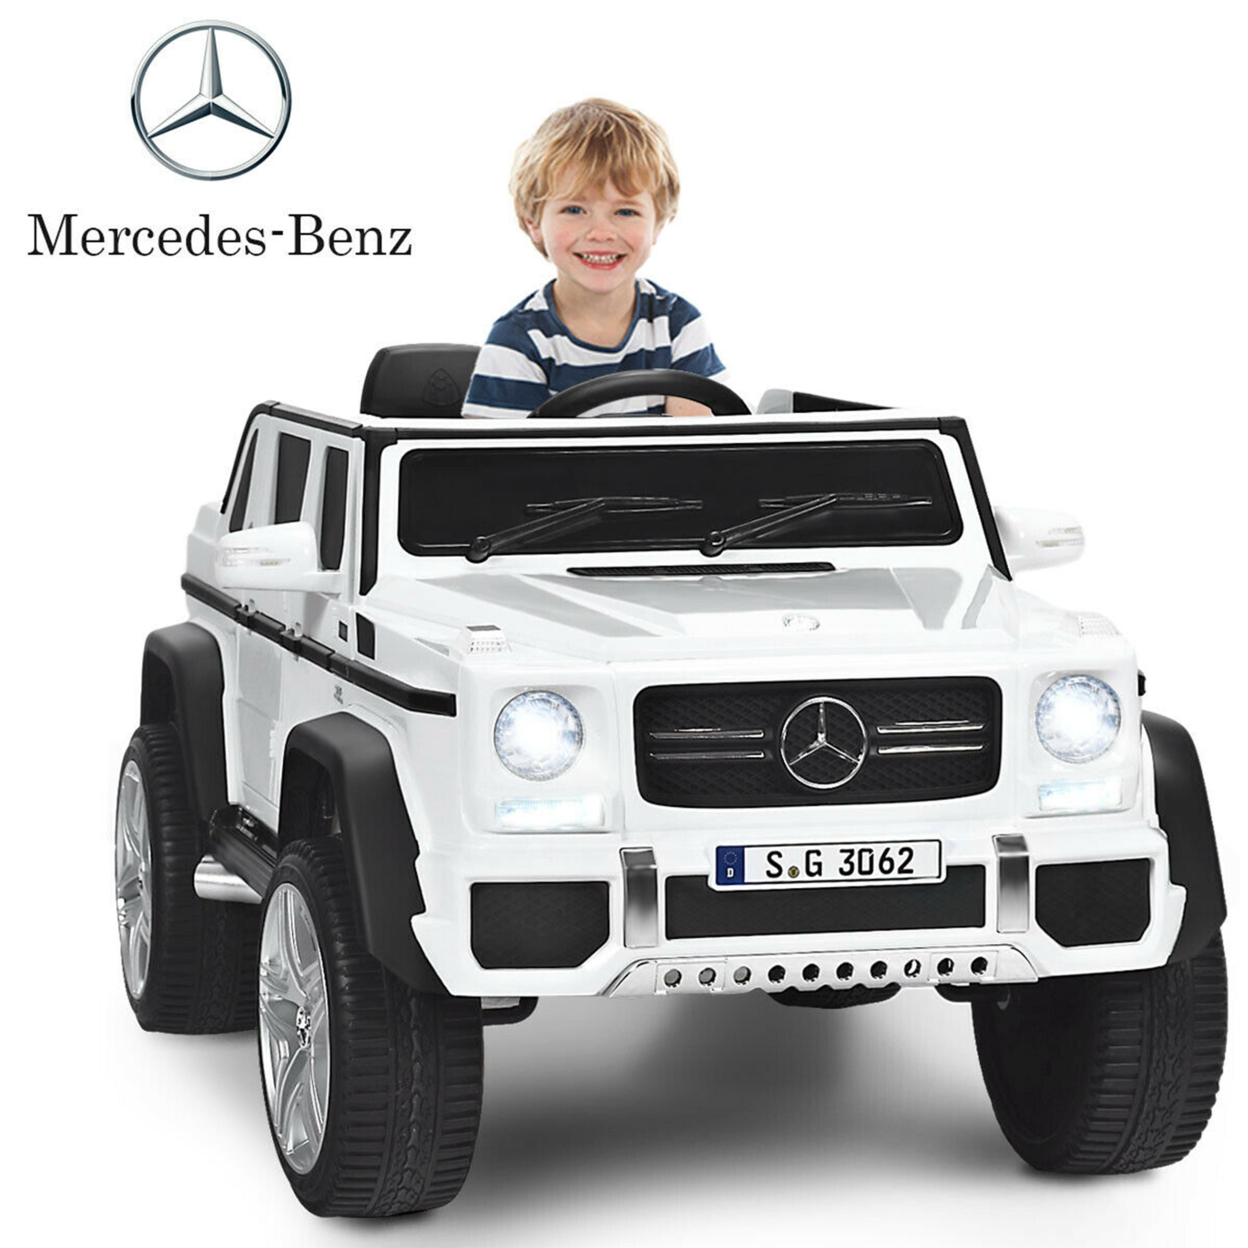 12V Licensed Mercedes-Benz Kids Ride On Car RC Motorized Vehicles W/ Trunk - White